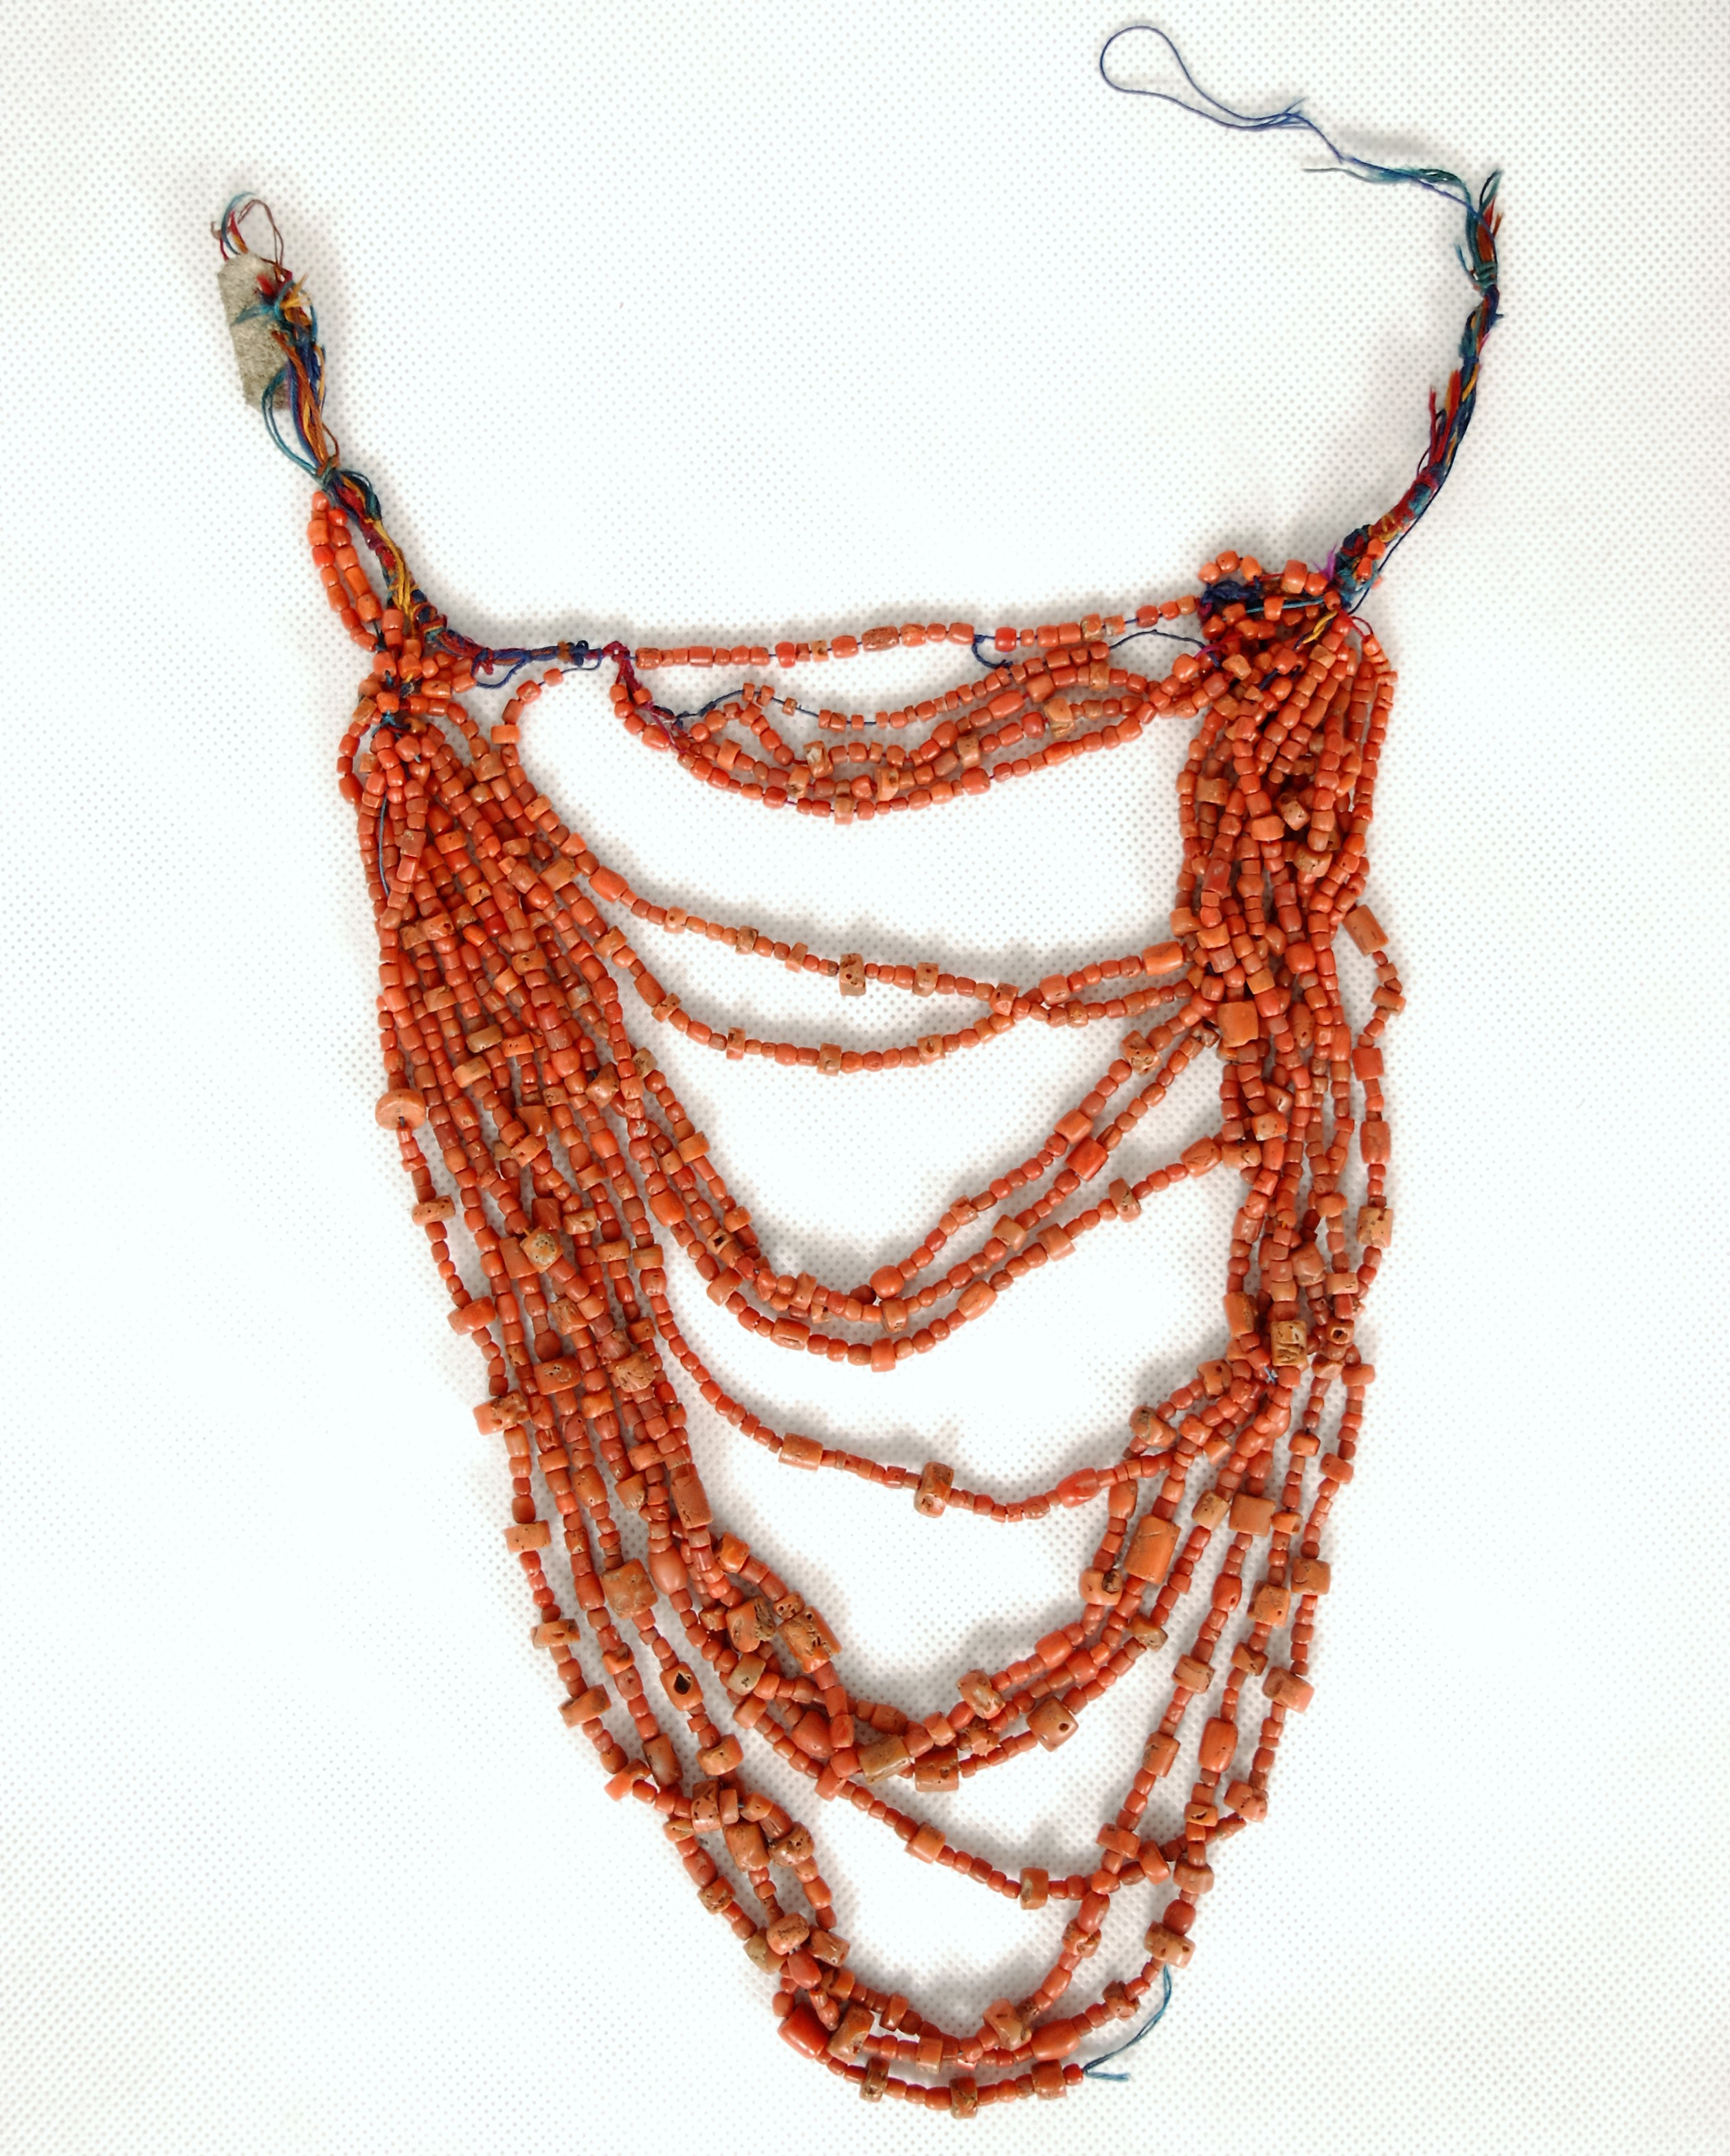 Traditional treasured coral necklace, Maramures, Romania